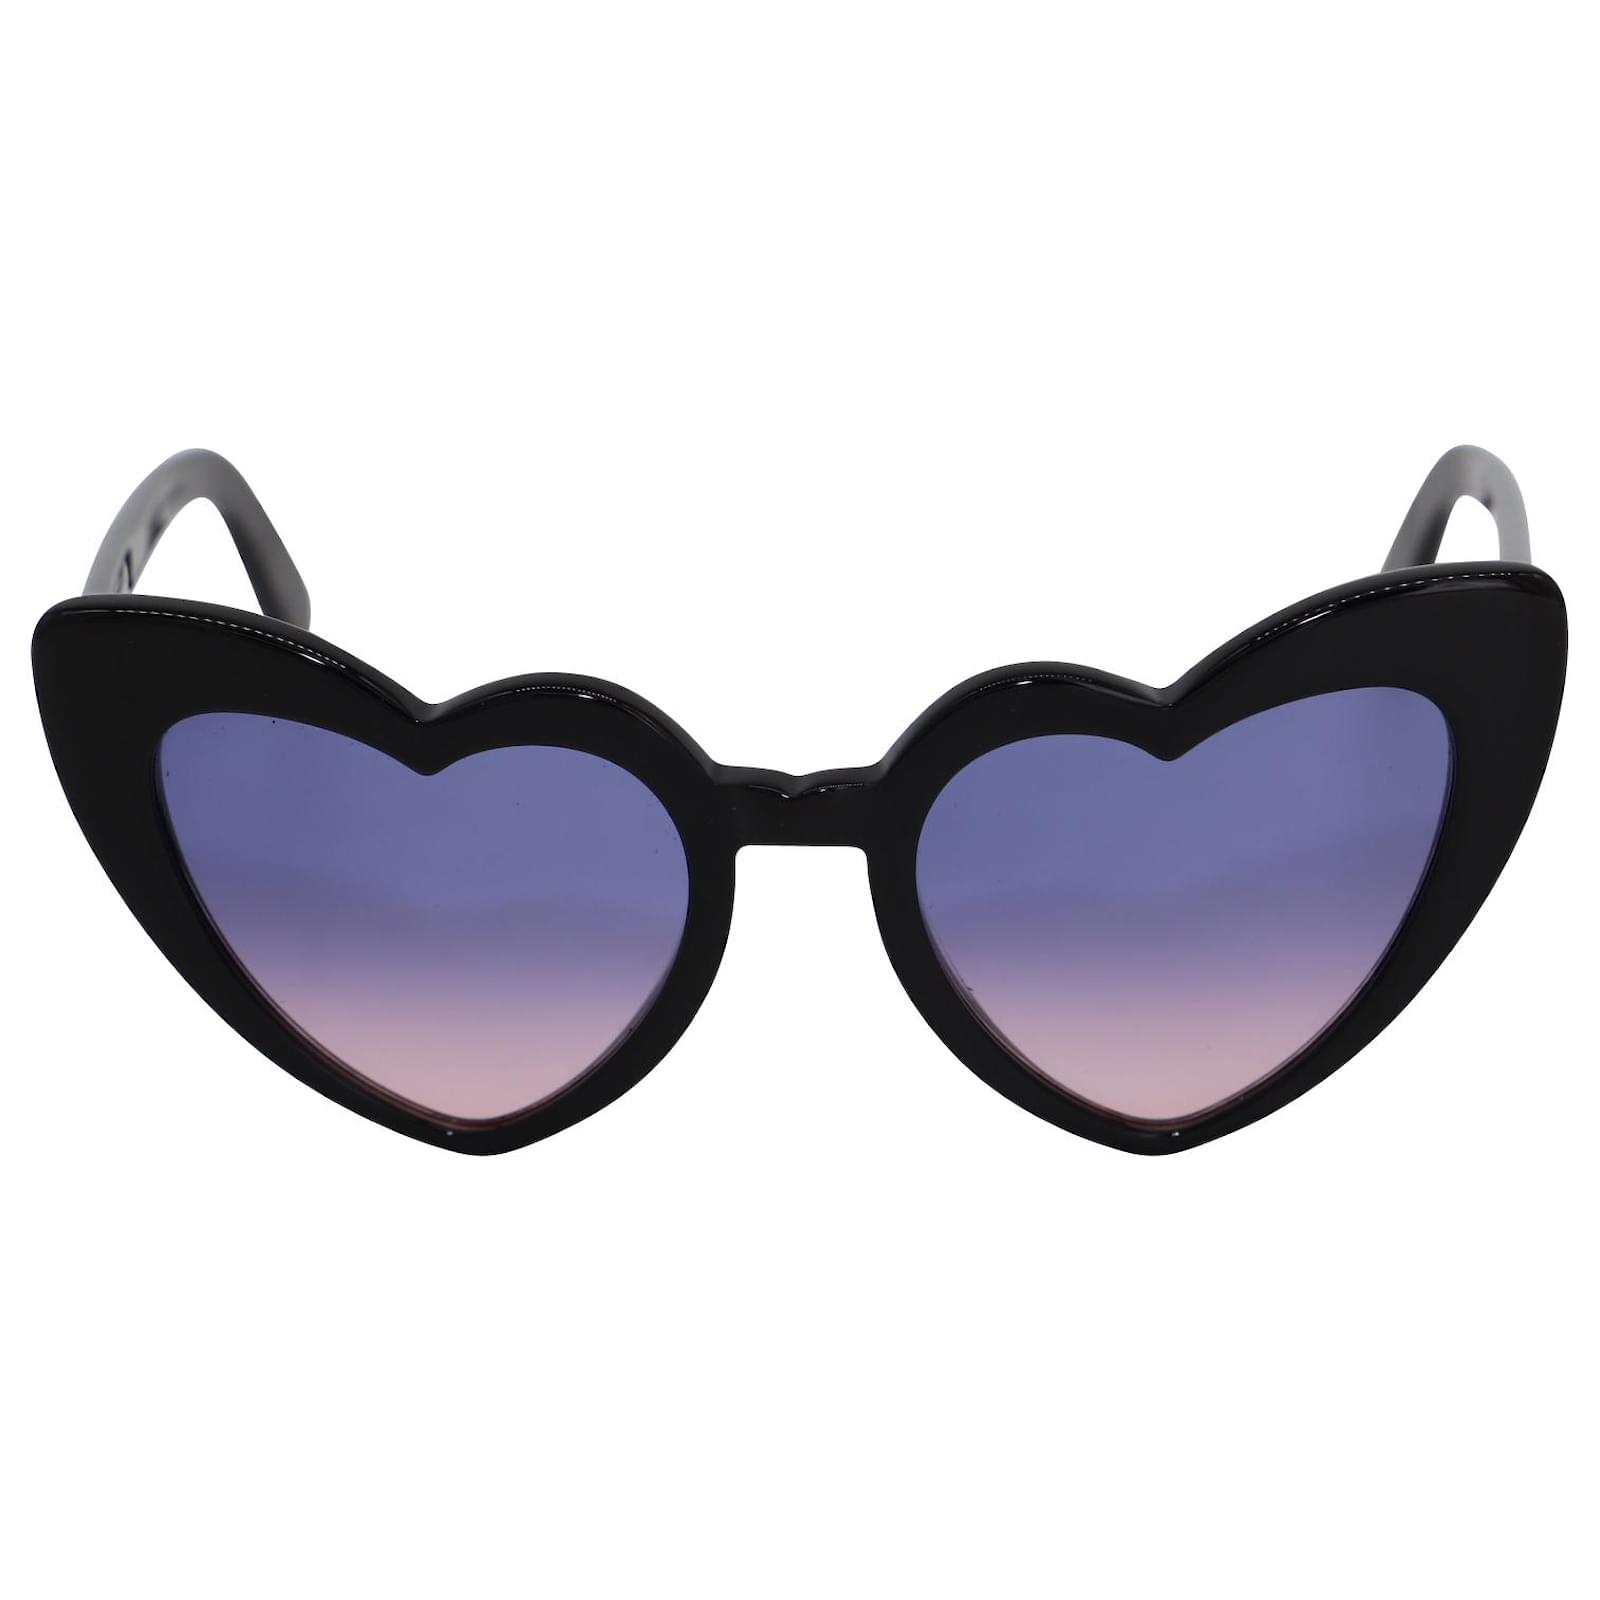 Loulou heart-shaped acetate sunglasses, Saint Laurent